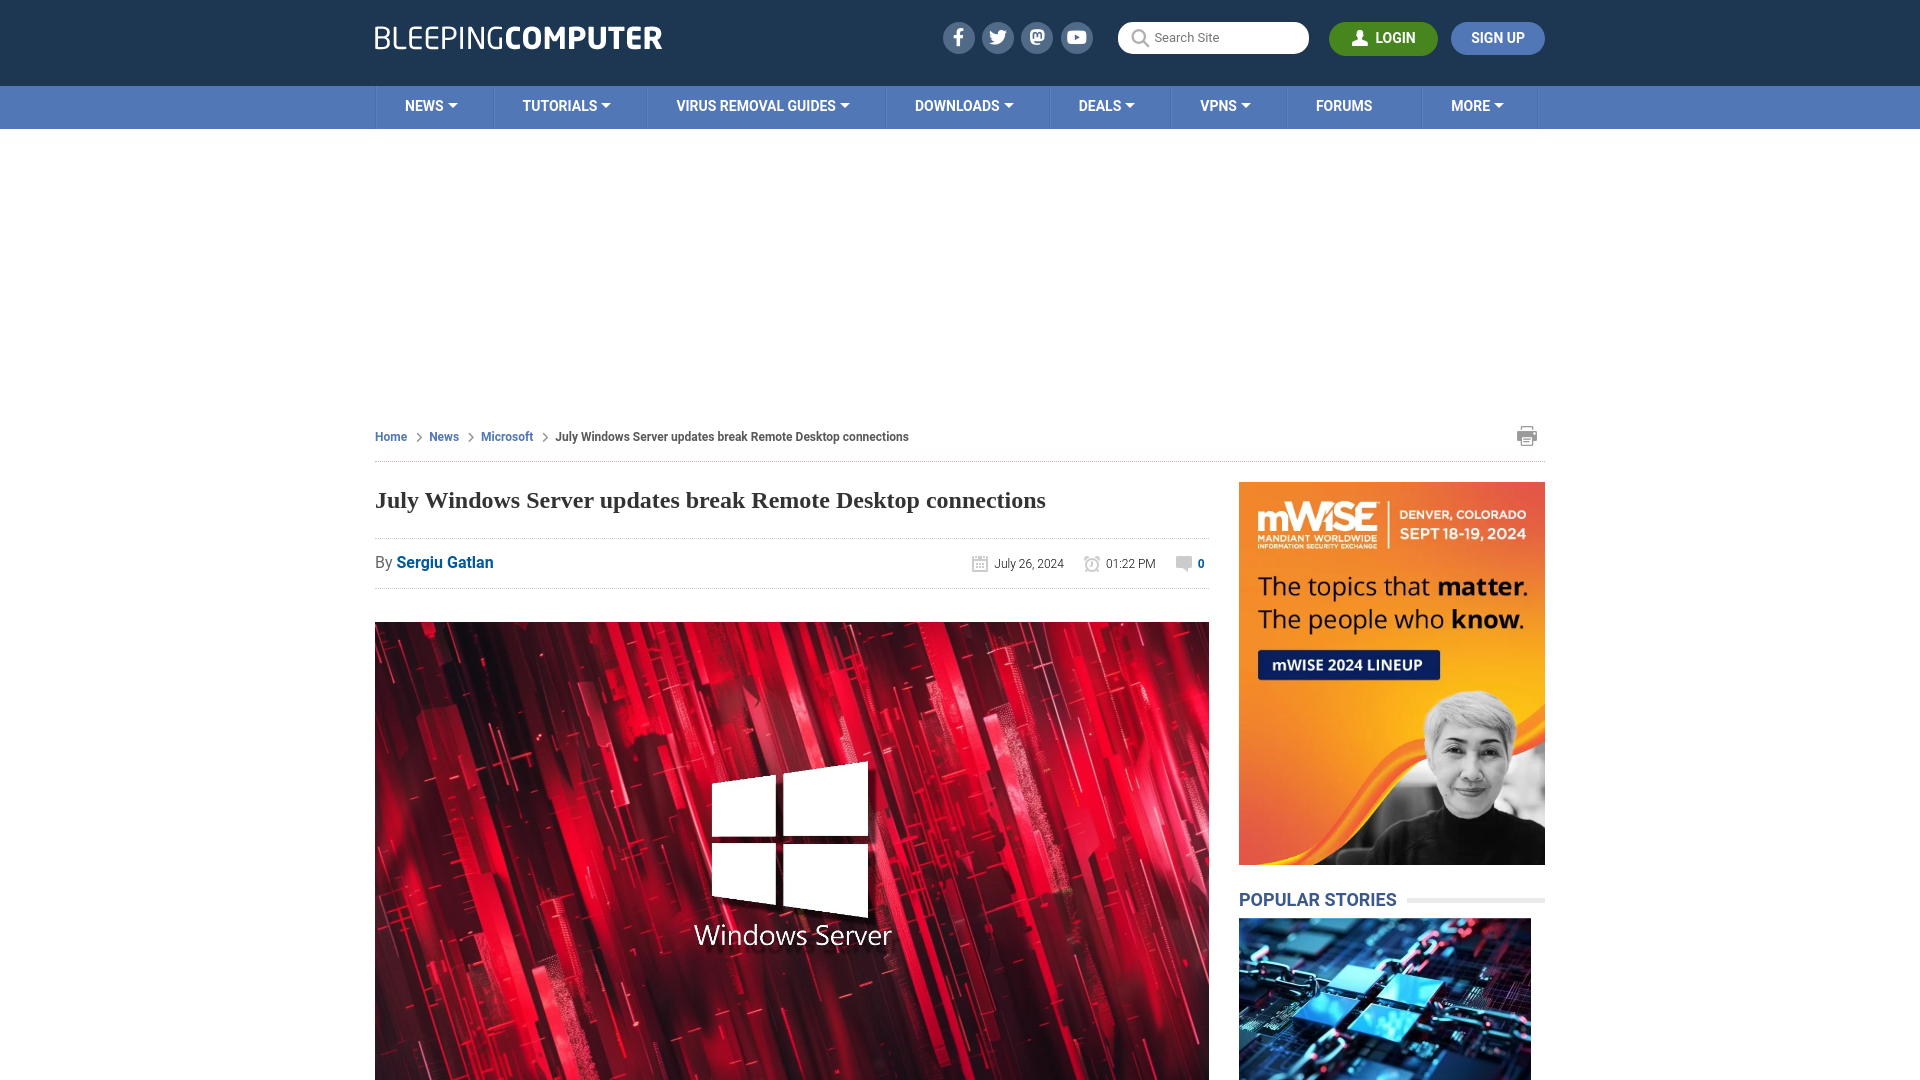 July Windows Server updates break Remote Desktop connections